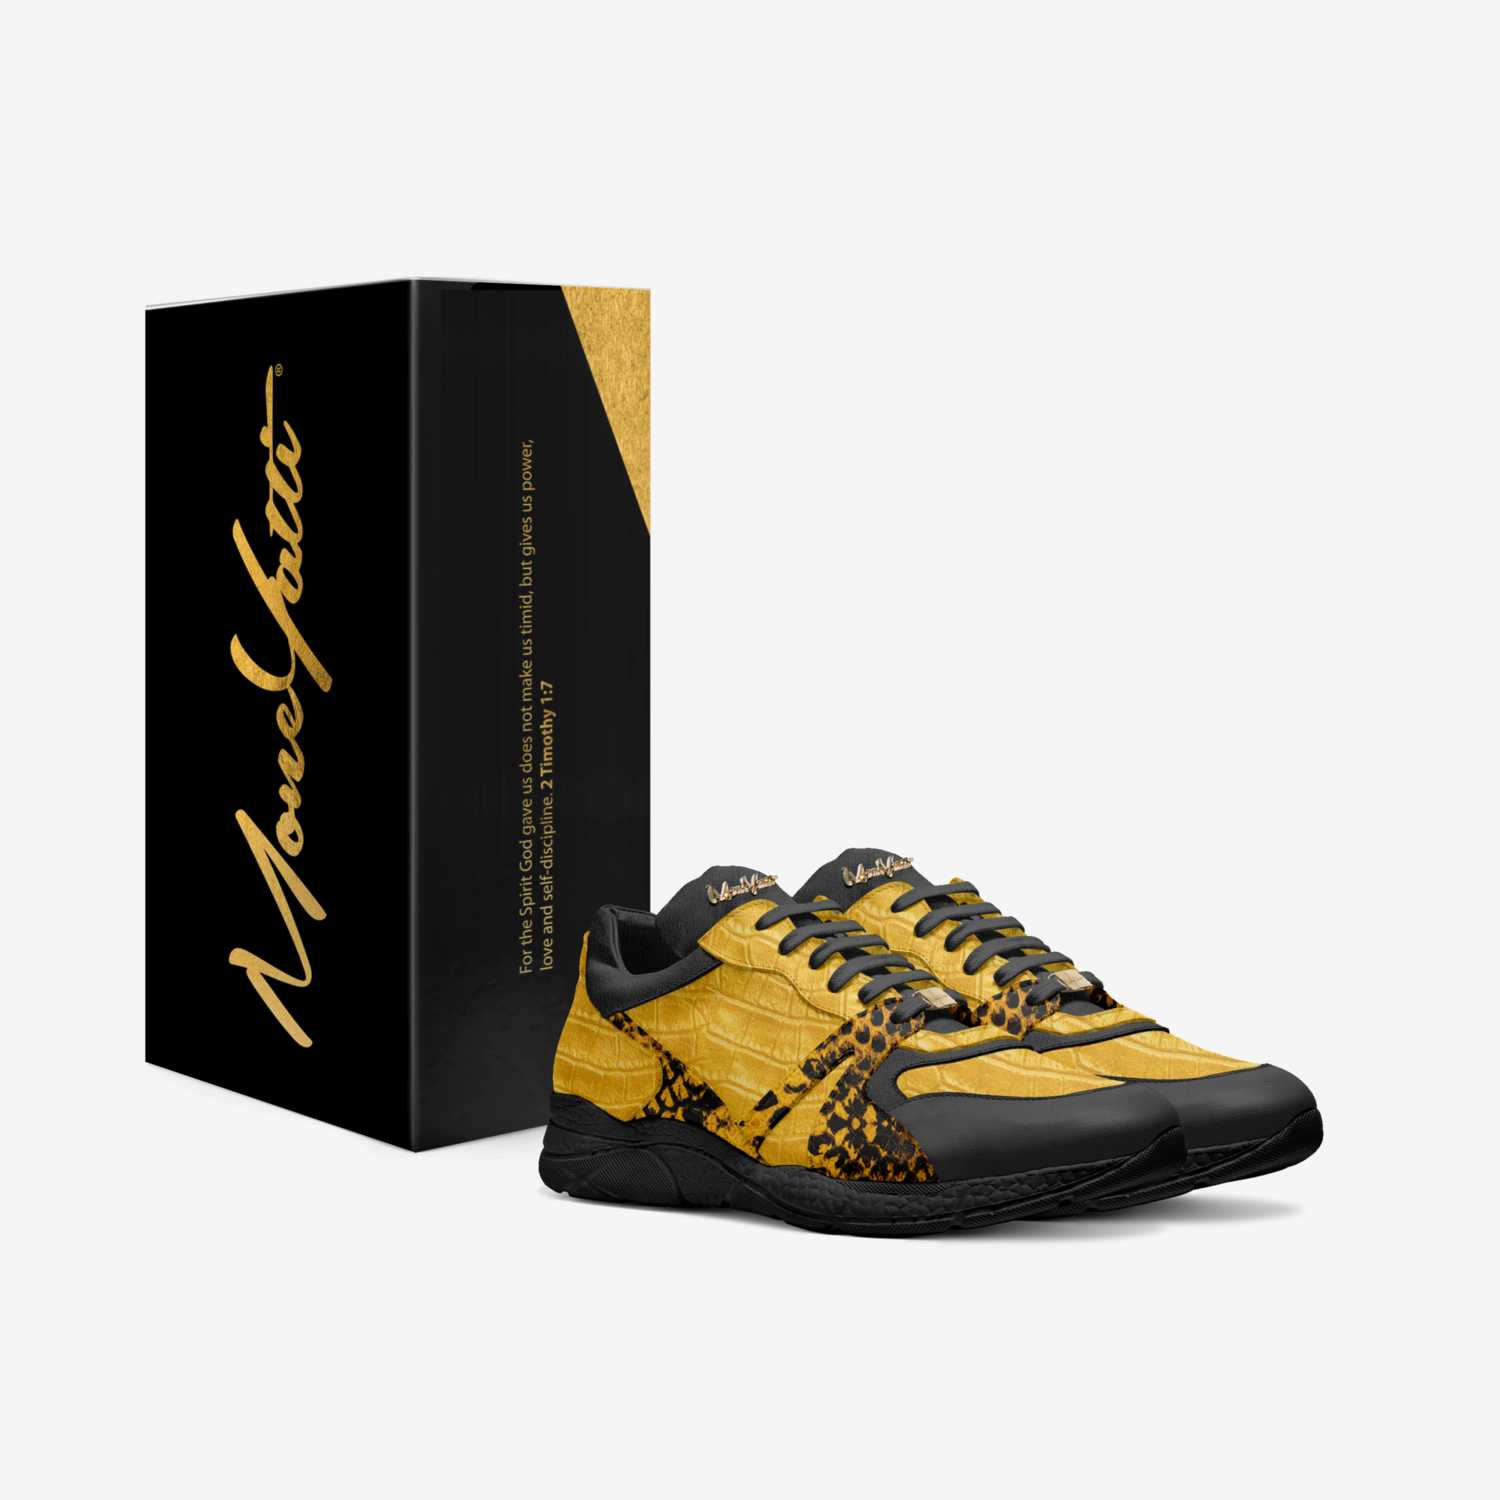 Nem P 57 custom made in Italy shoes by Moneyatti Brand | Box view